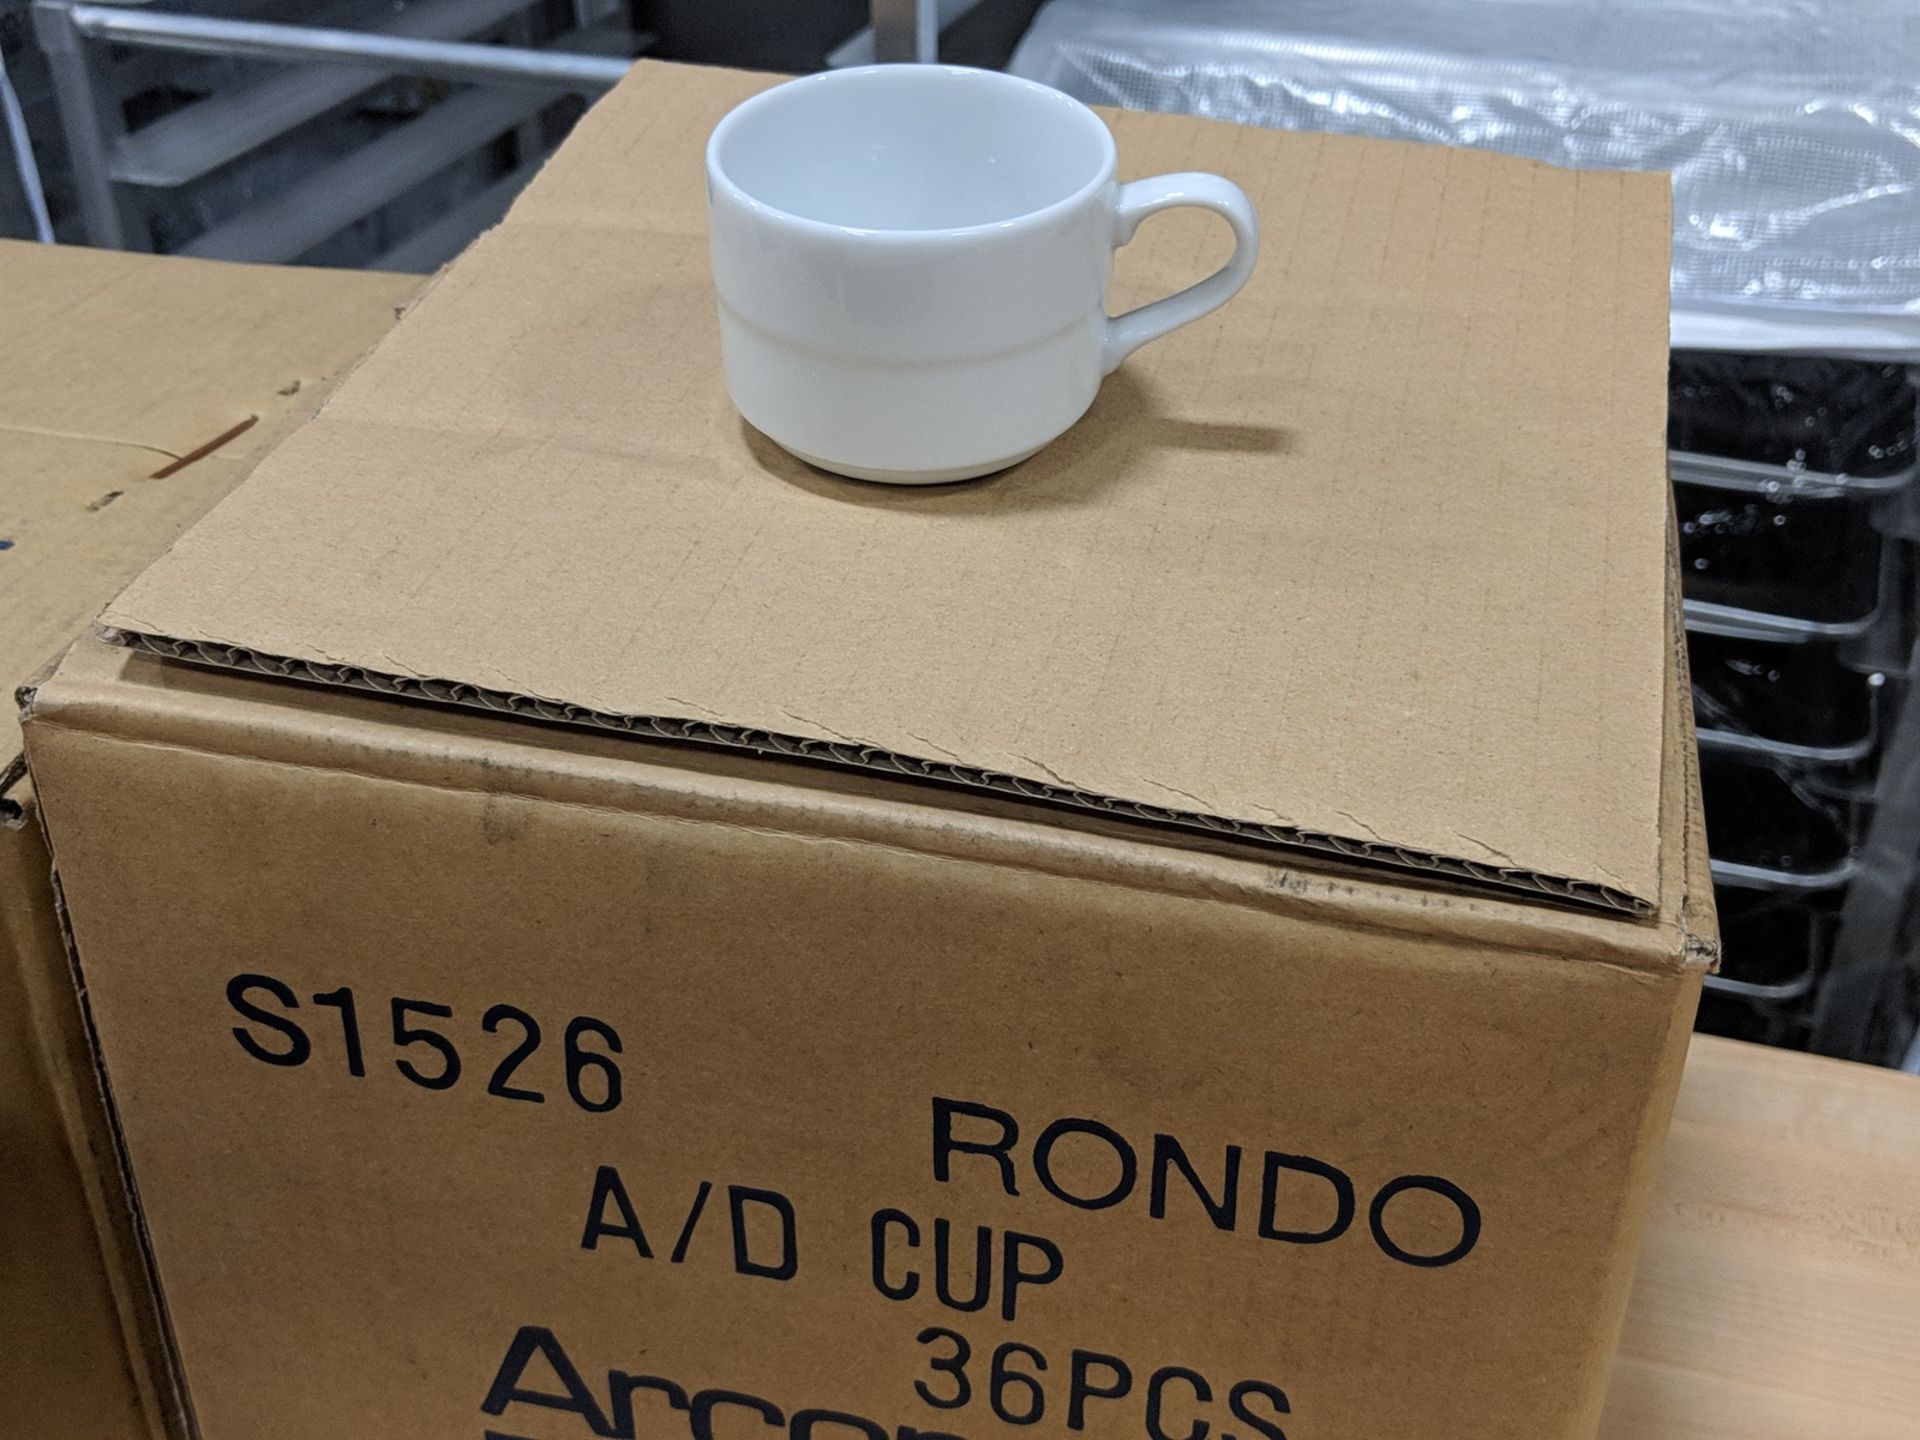 4oz/120ml White Porcelain Cups, Arcoroc "Rondo" S1526 - Lot of 12